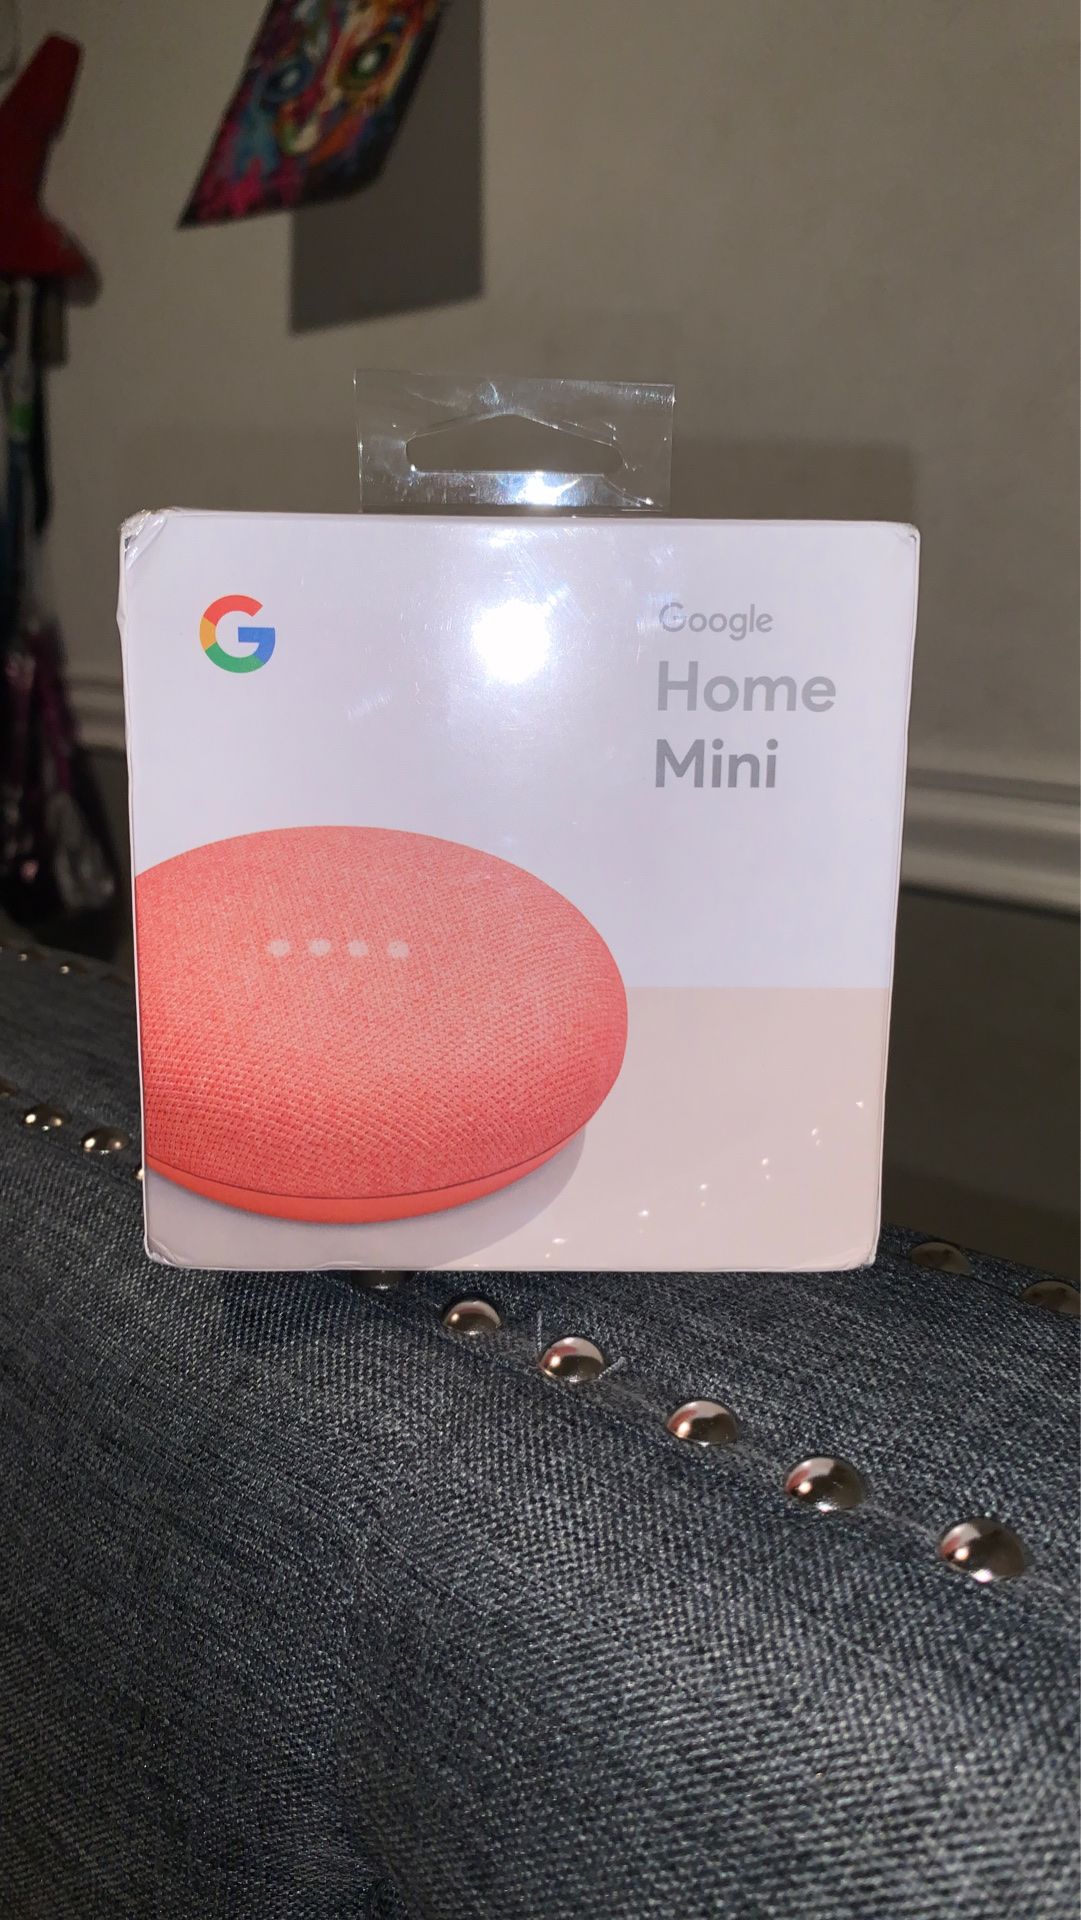 Google mini home (red)